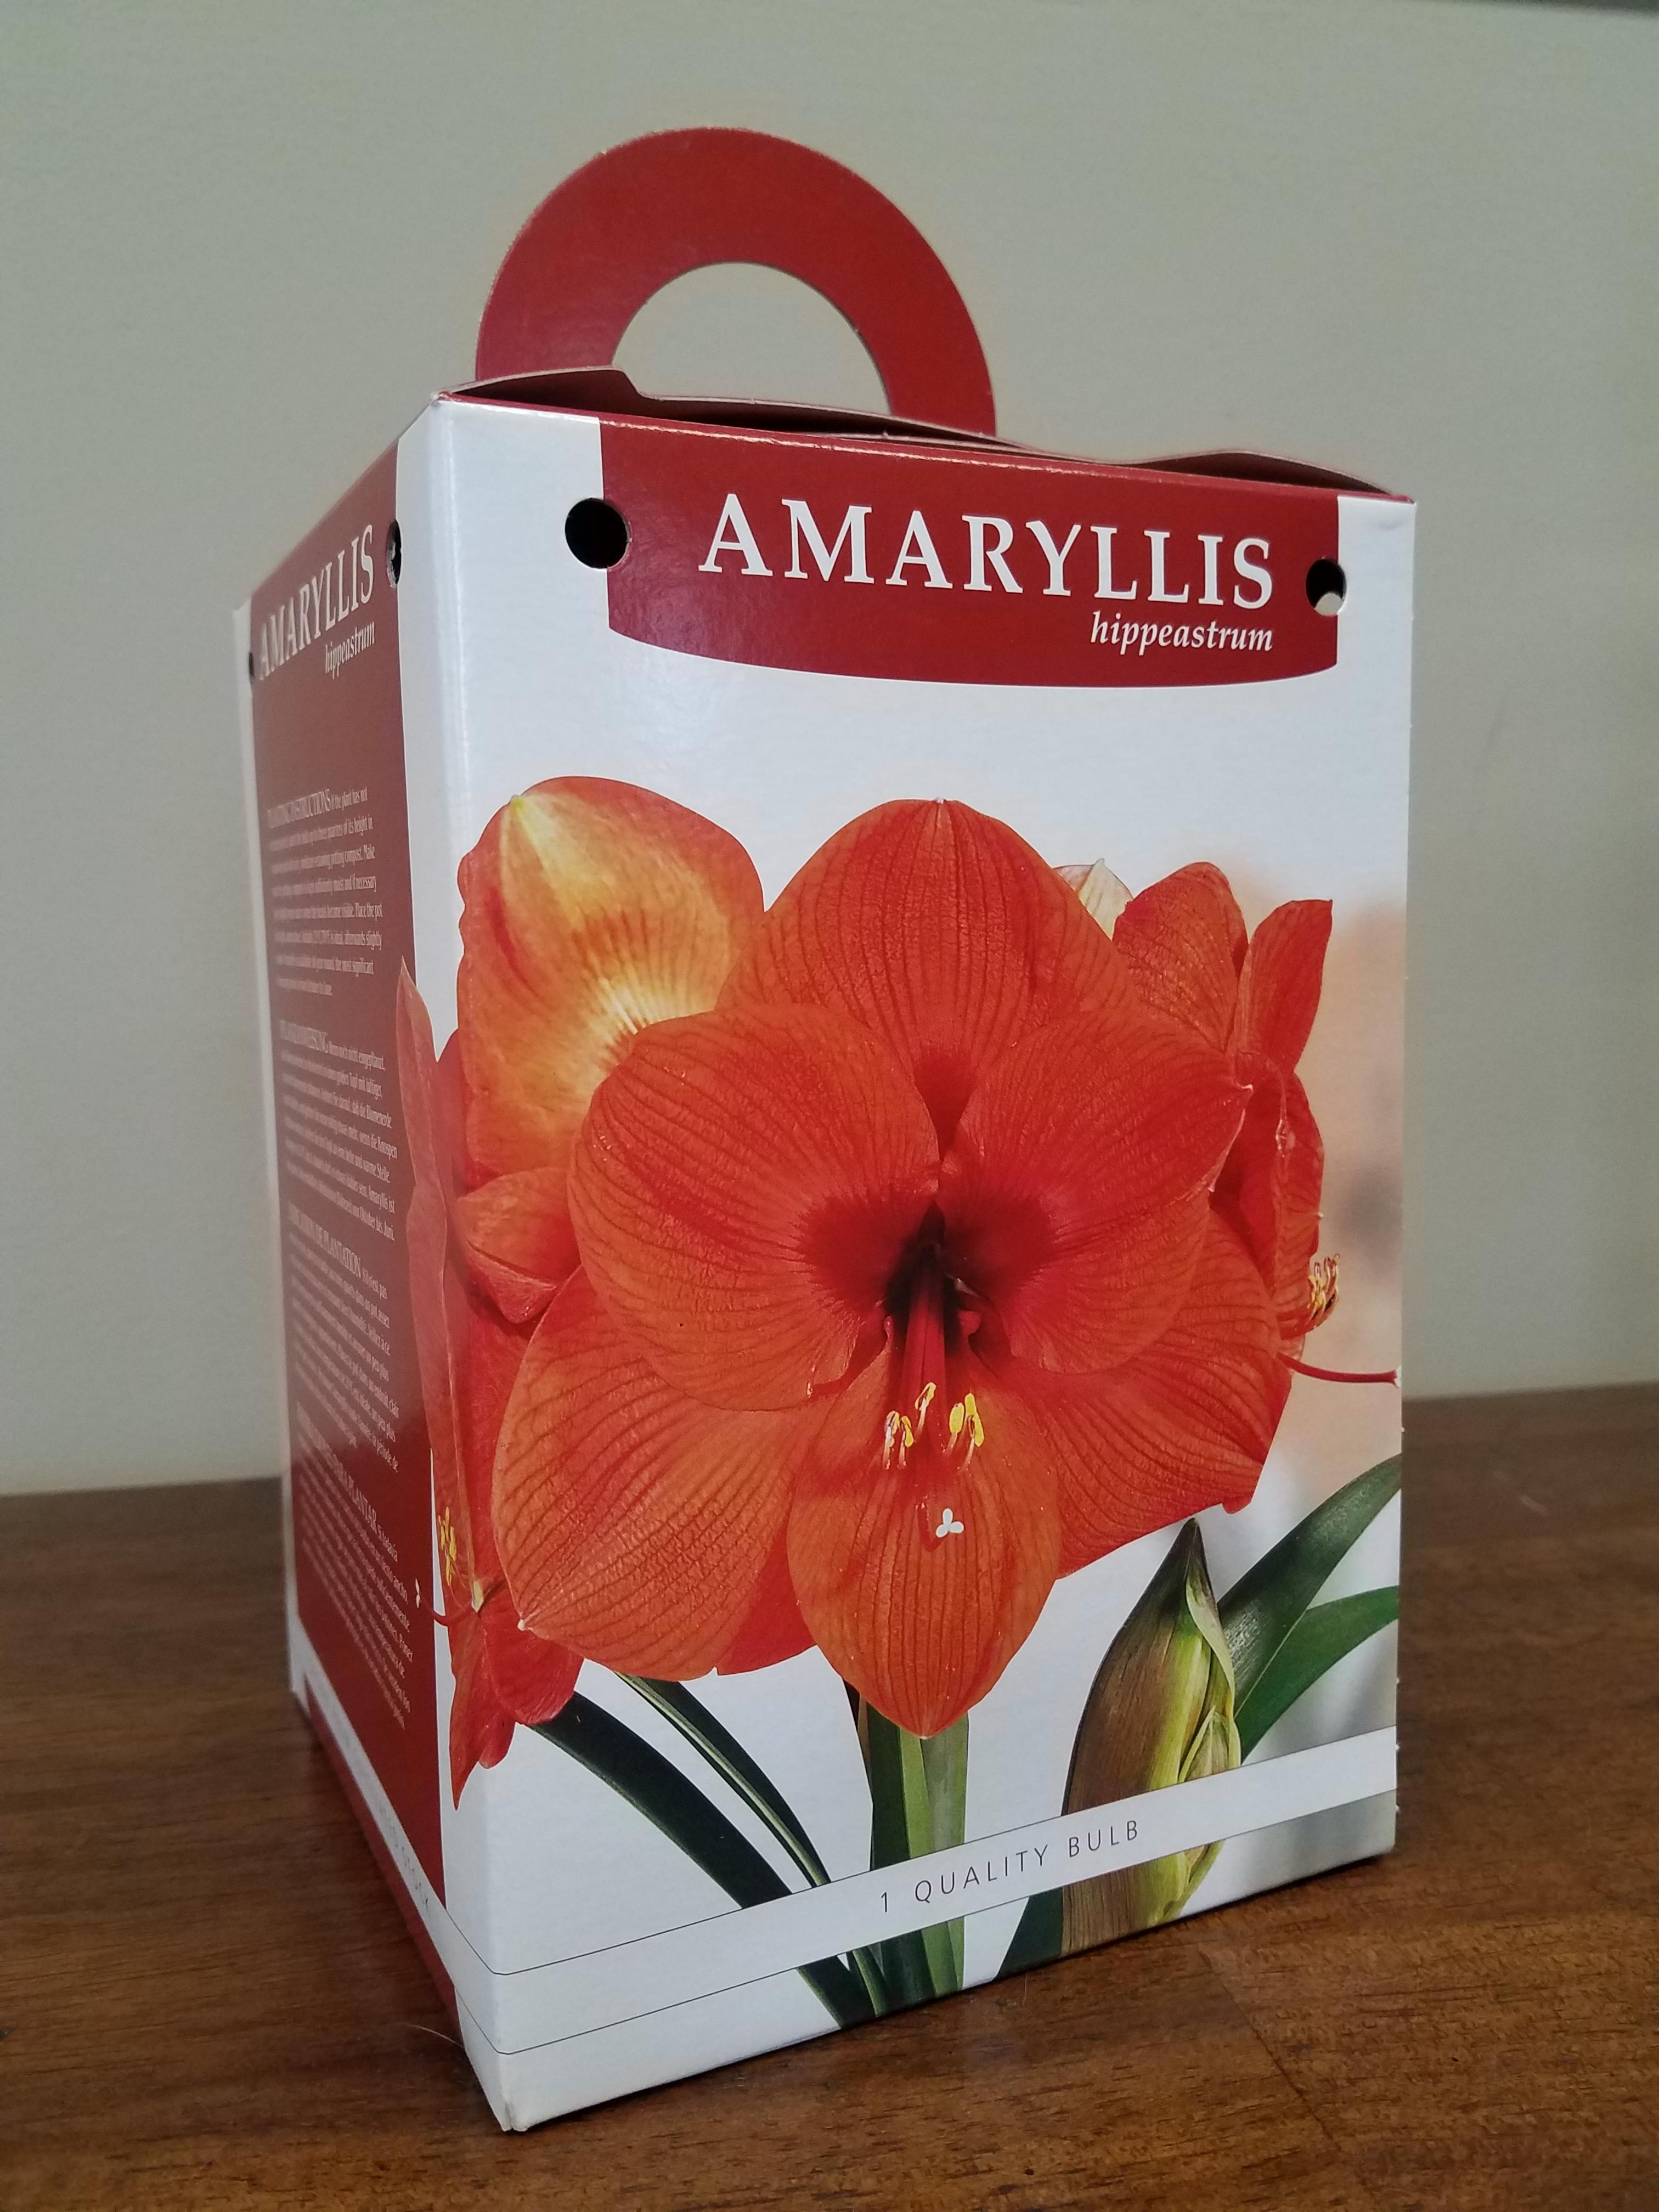 Hippeastrum - Amaryllis Gift Kit from Leo Berbee Bulb Company